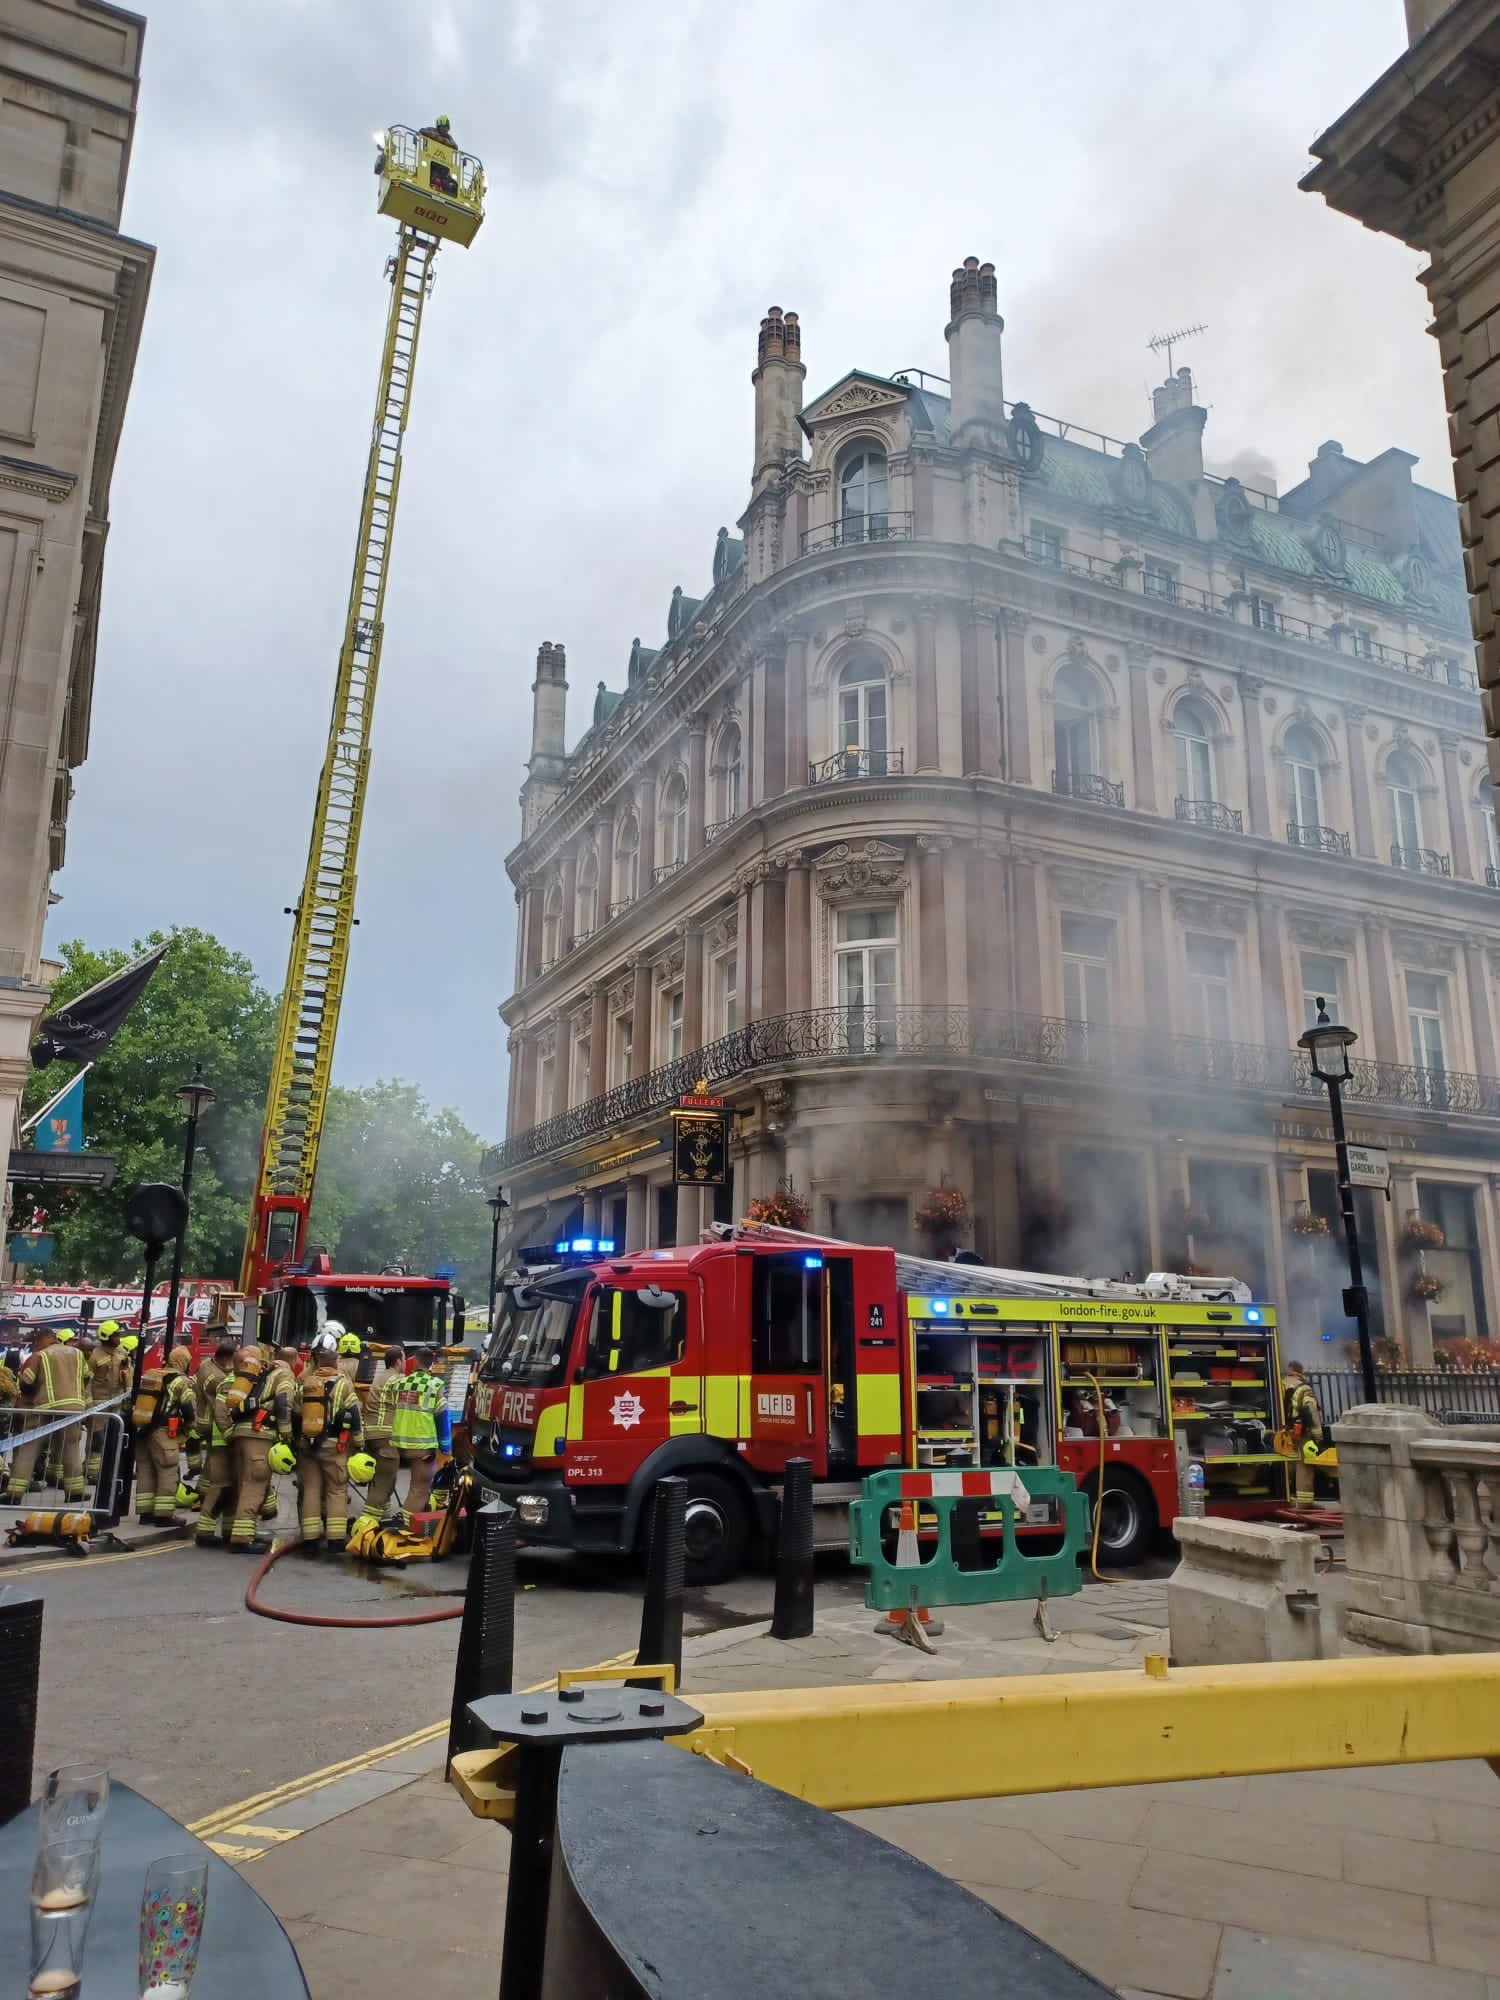 Firefighters battle a blaze in the basement of The Admiralty pub in Trafalgar Square (London Fire Brigade/PA)